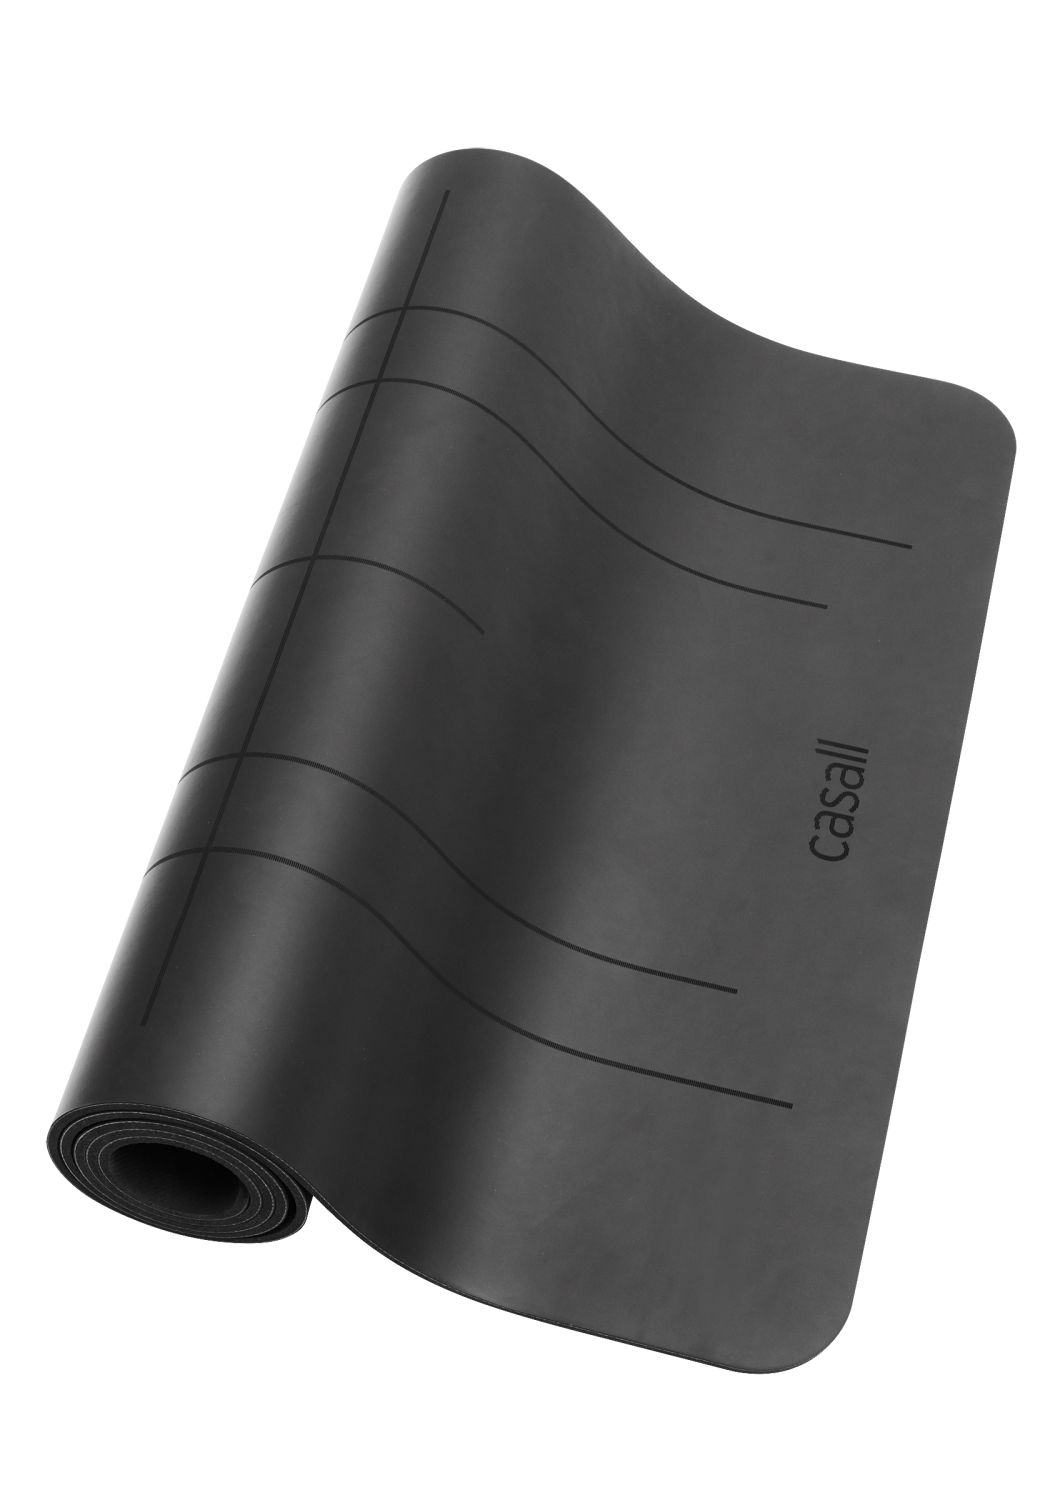 Casall Yoga mat Grip&Cushion III 5mm